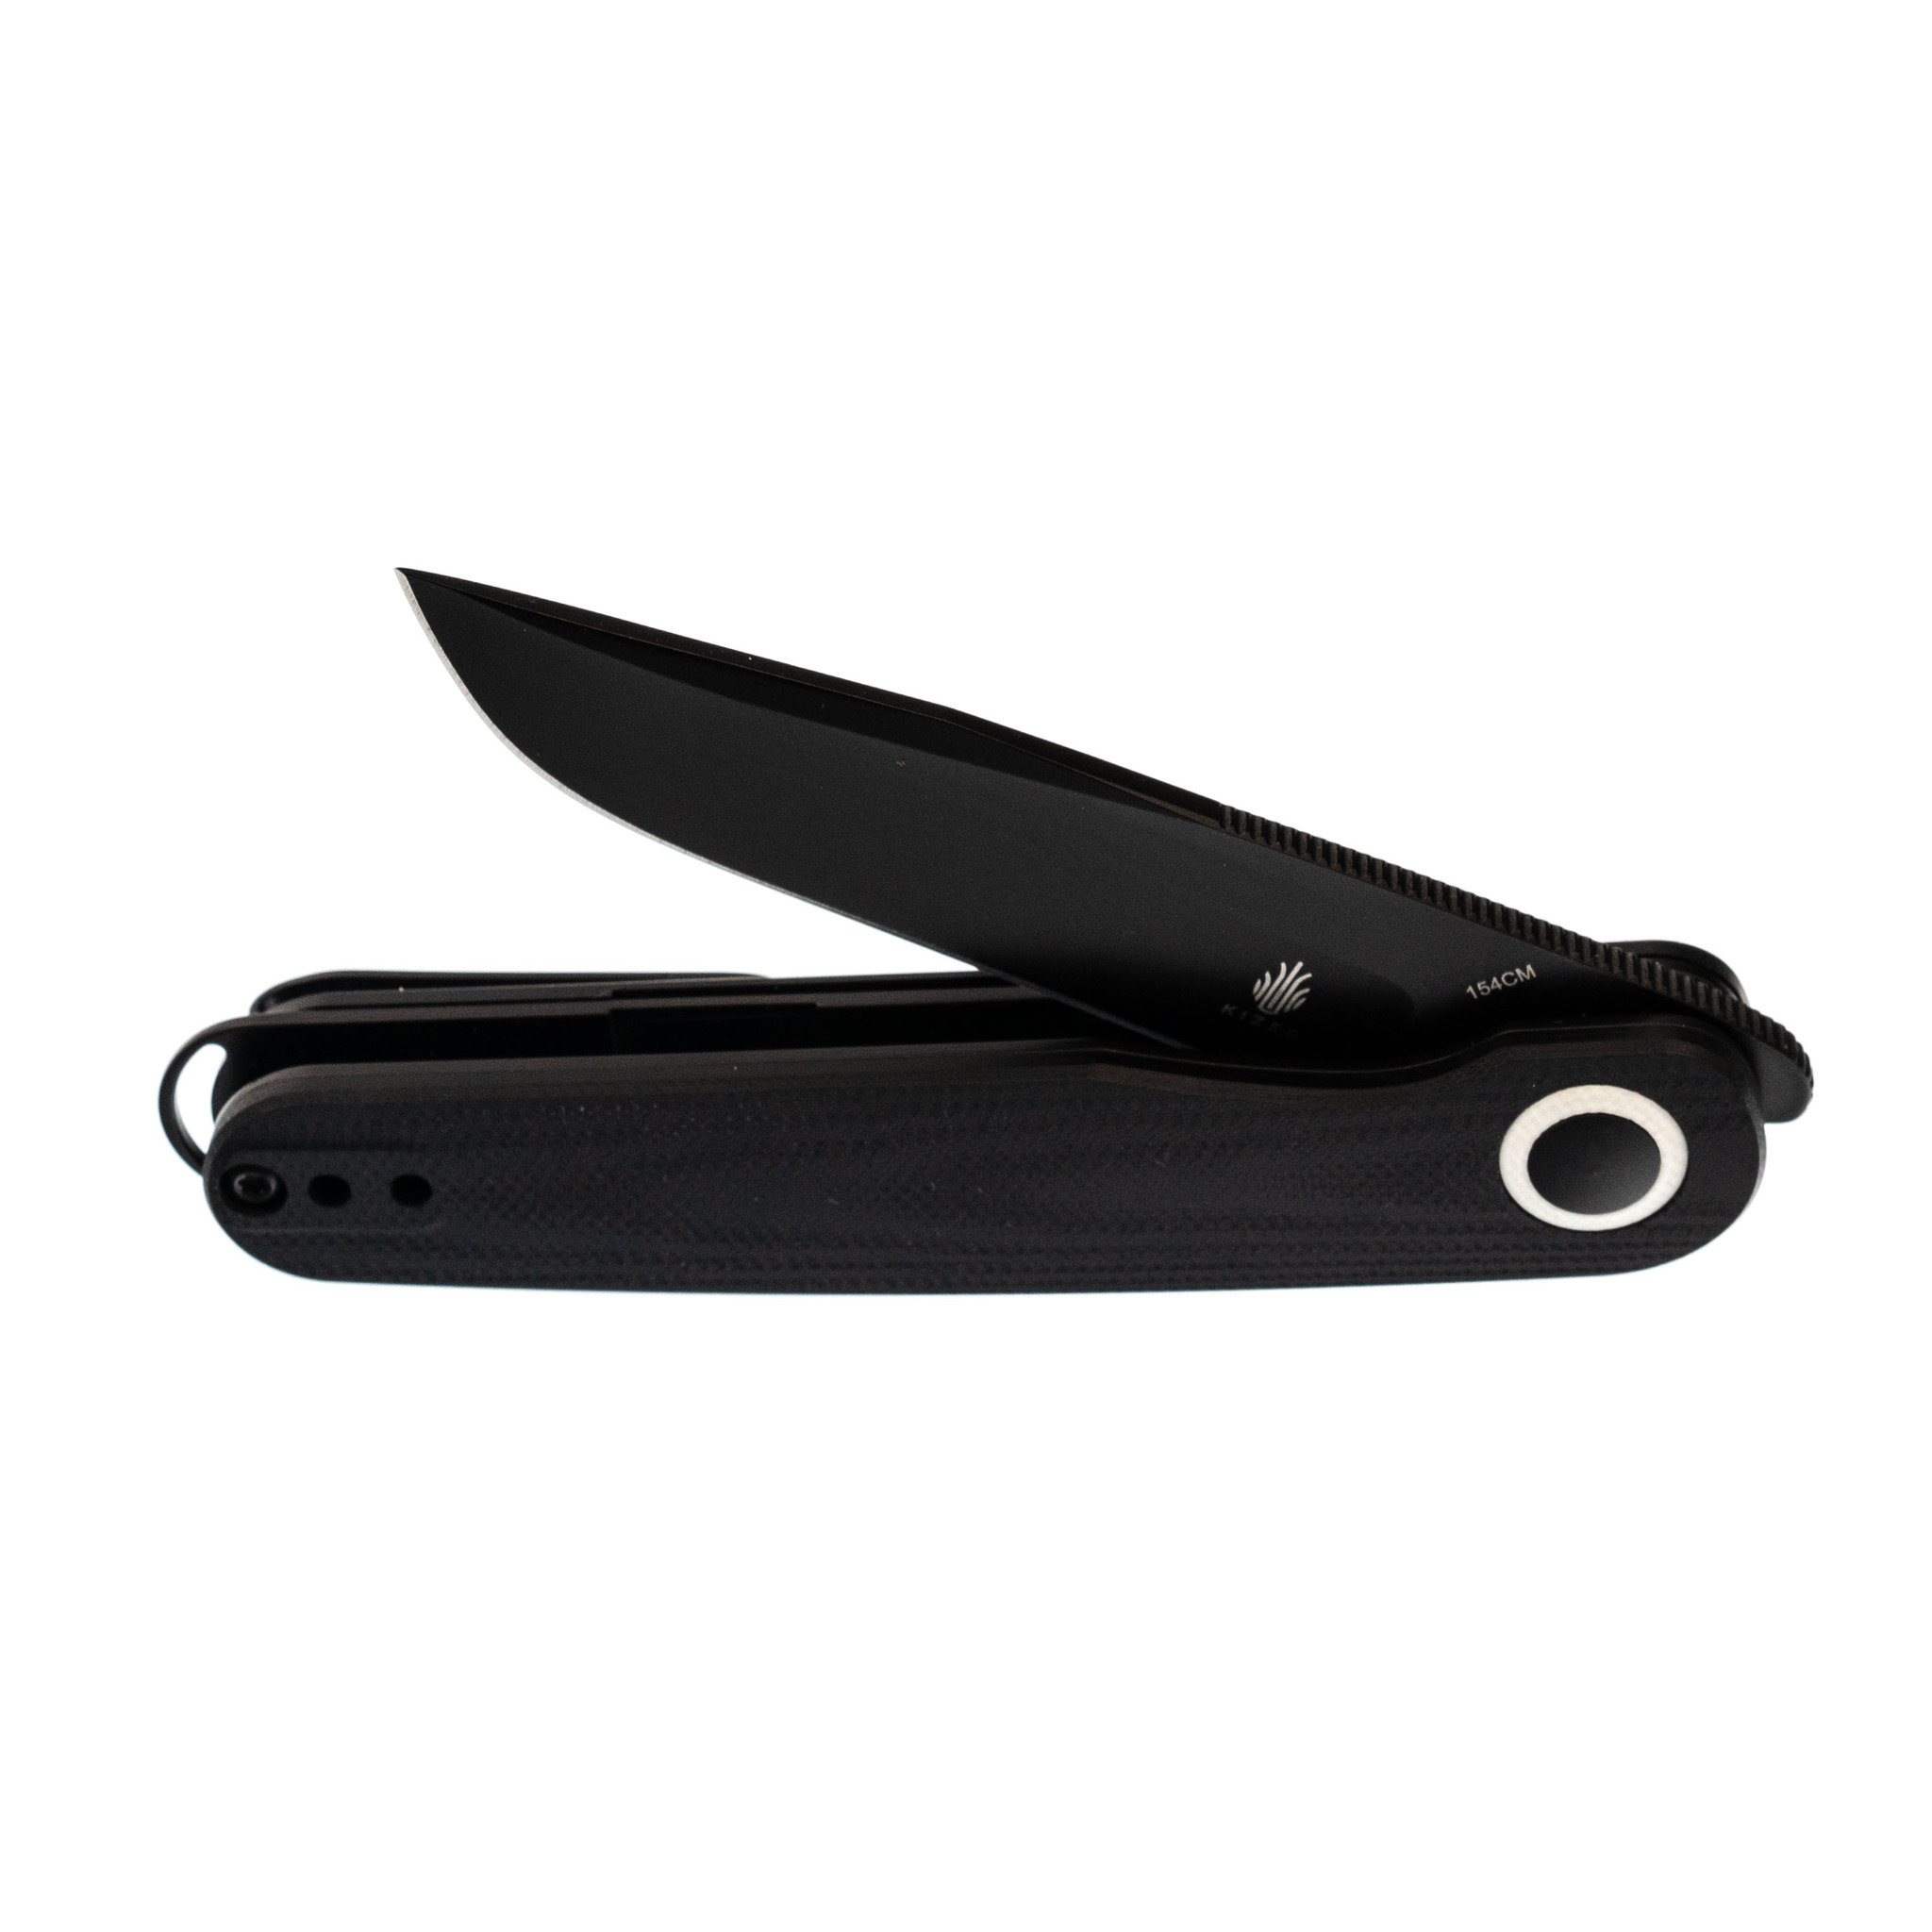 Складной нож Kizer Squidward Black, сталь 154CM, рукоять G10 - фото 6